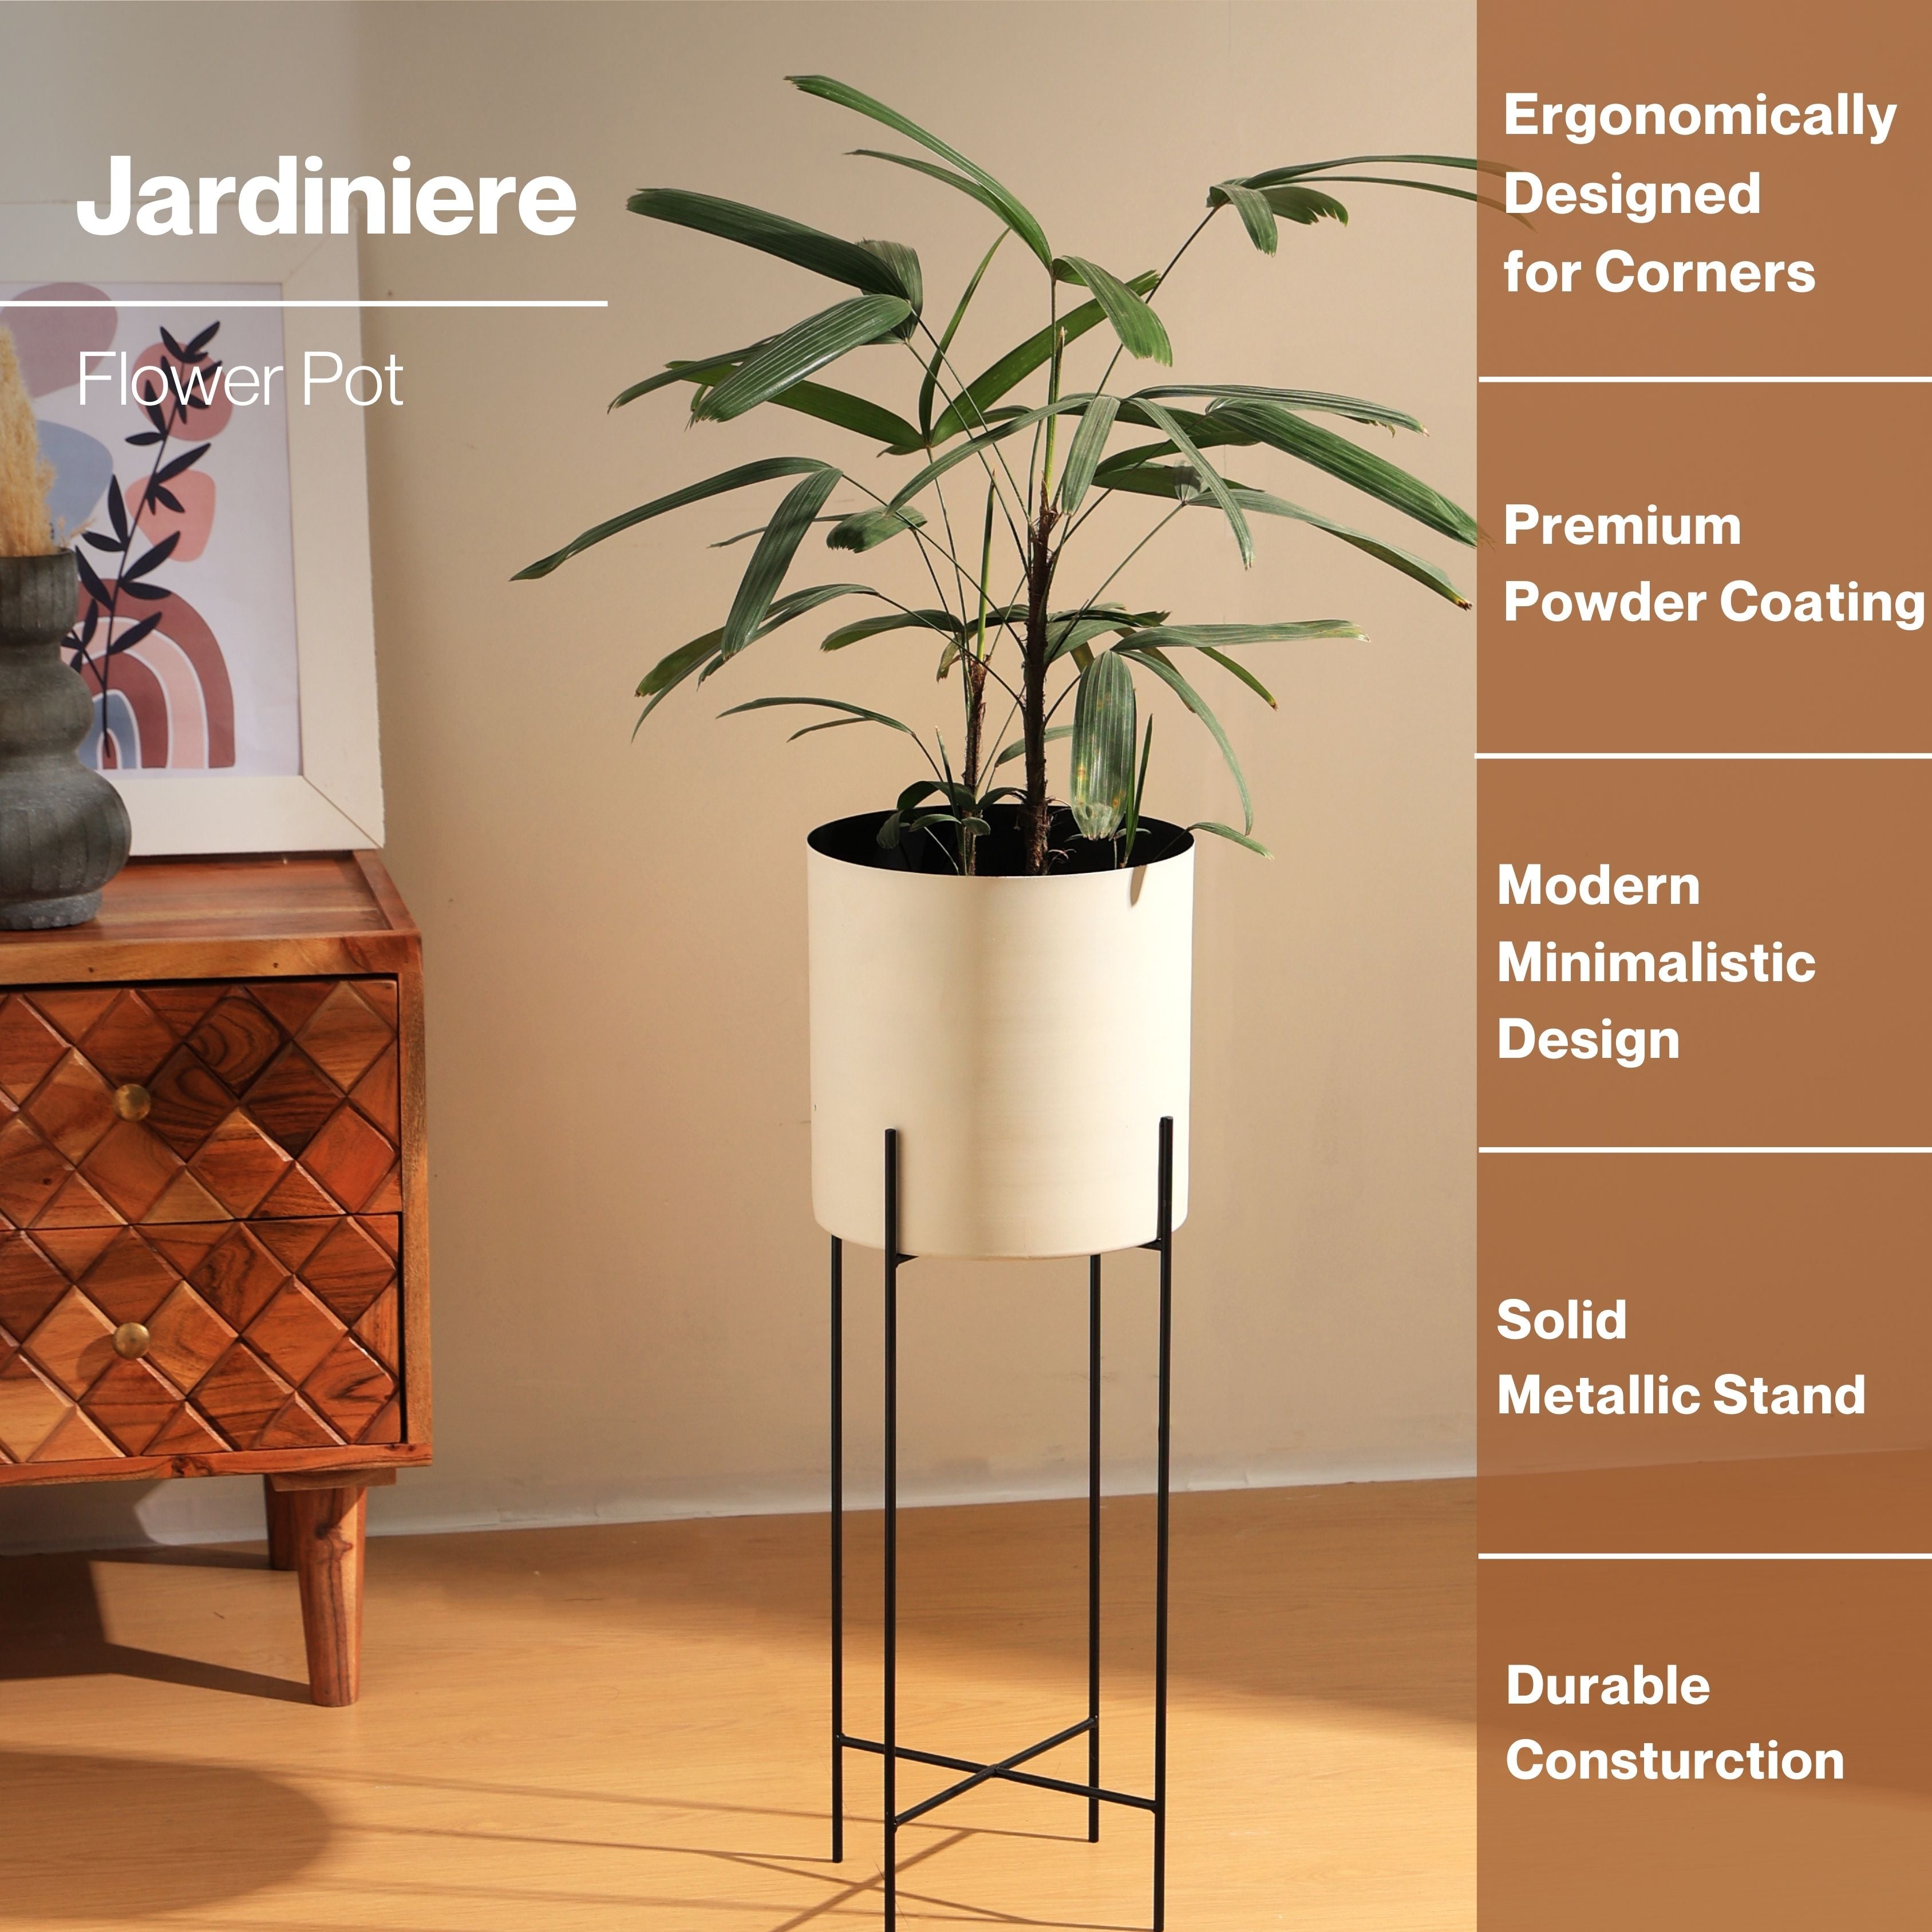 Jardinière (Planter Pot - Single) - Planter, Container, indoor plant Pot, Indoor Planting